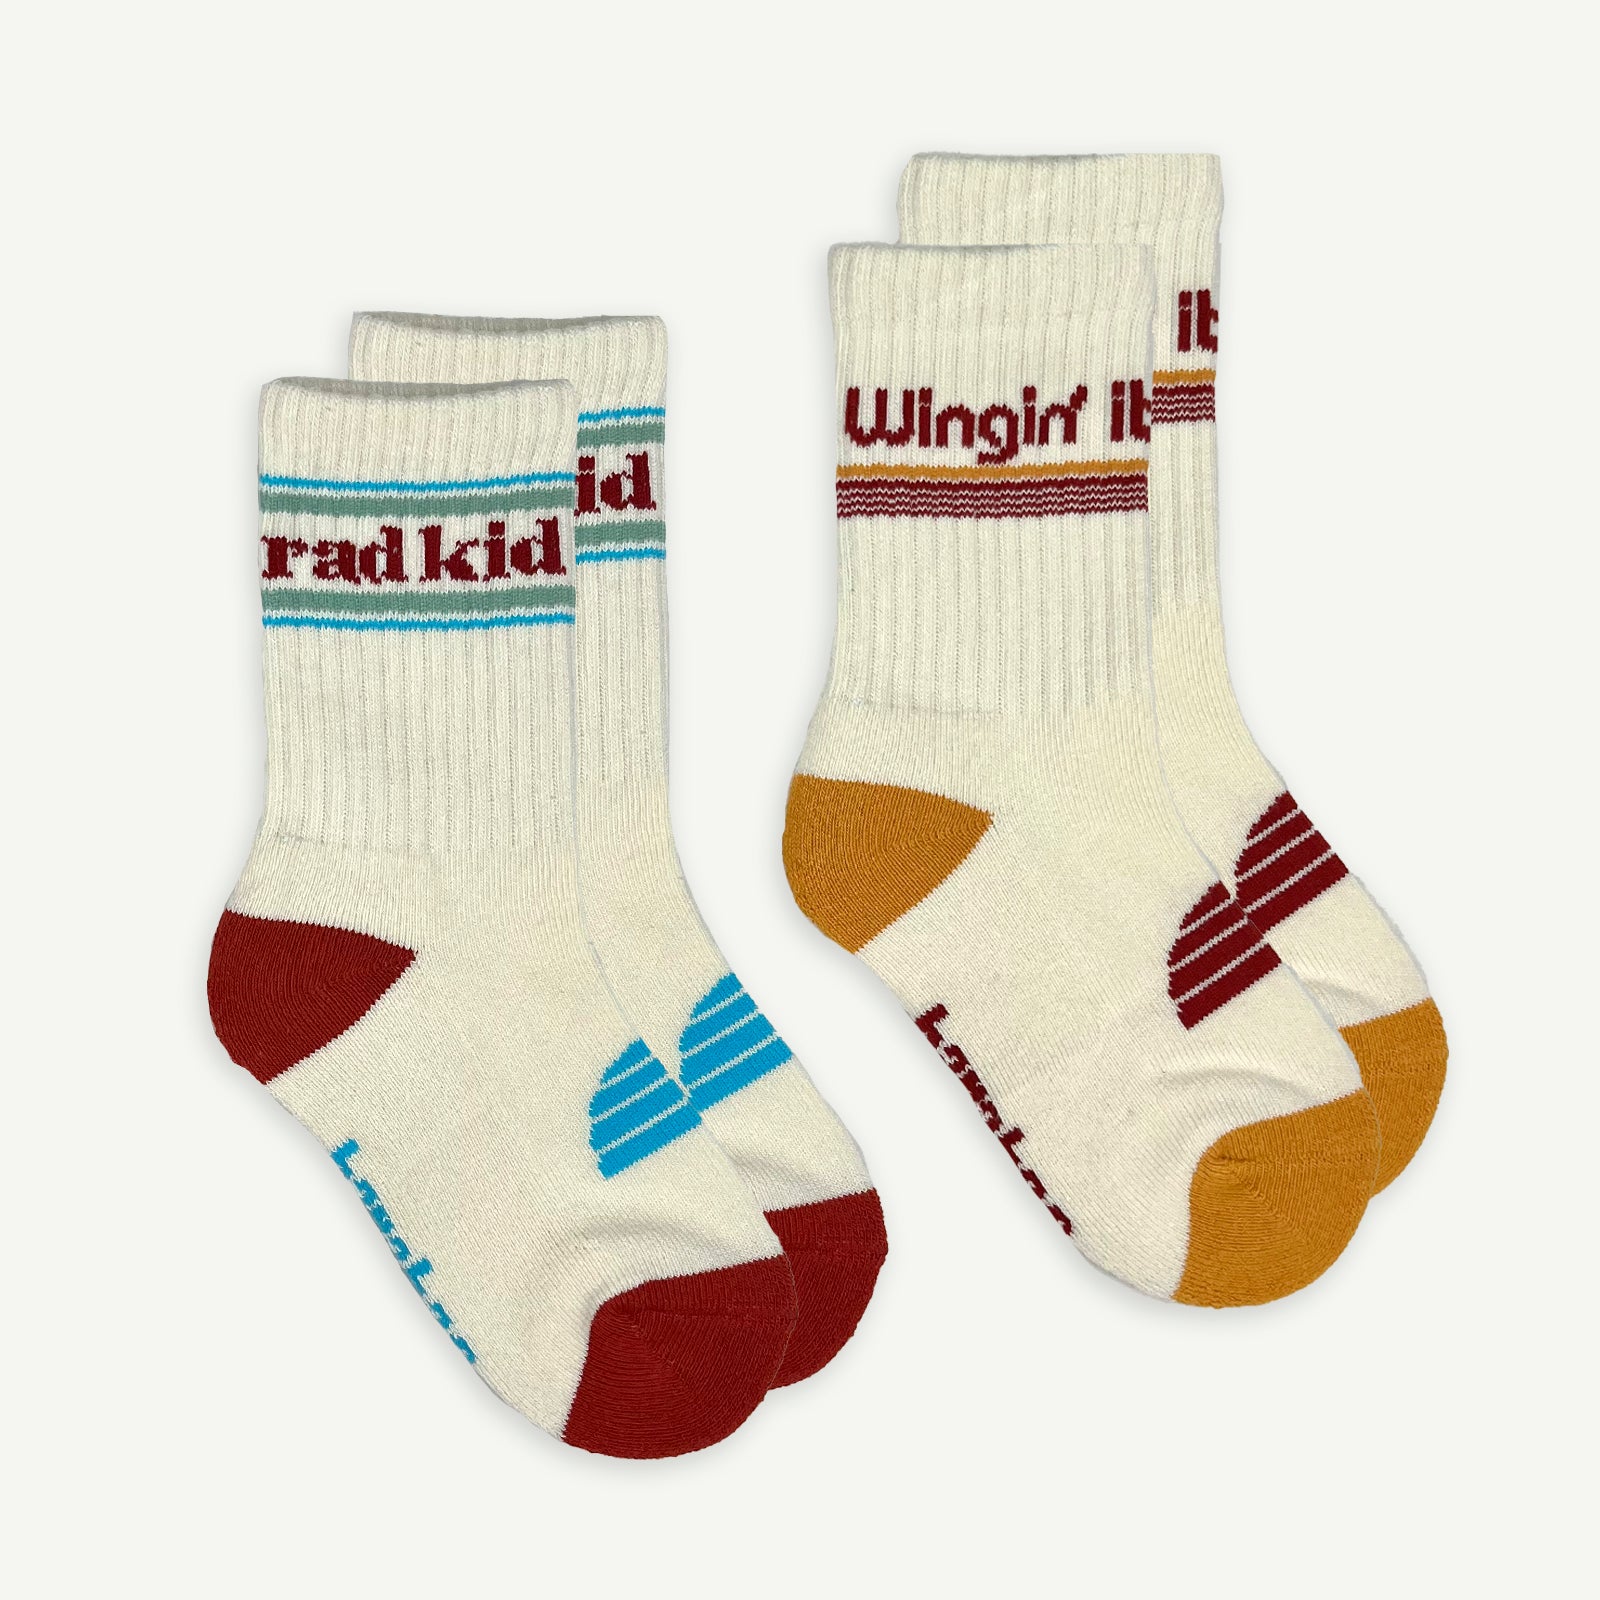 Rad Kid and Wingin' It Organic Cotton Sock Pack